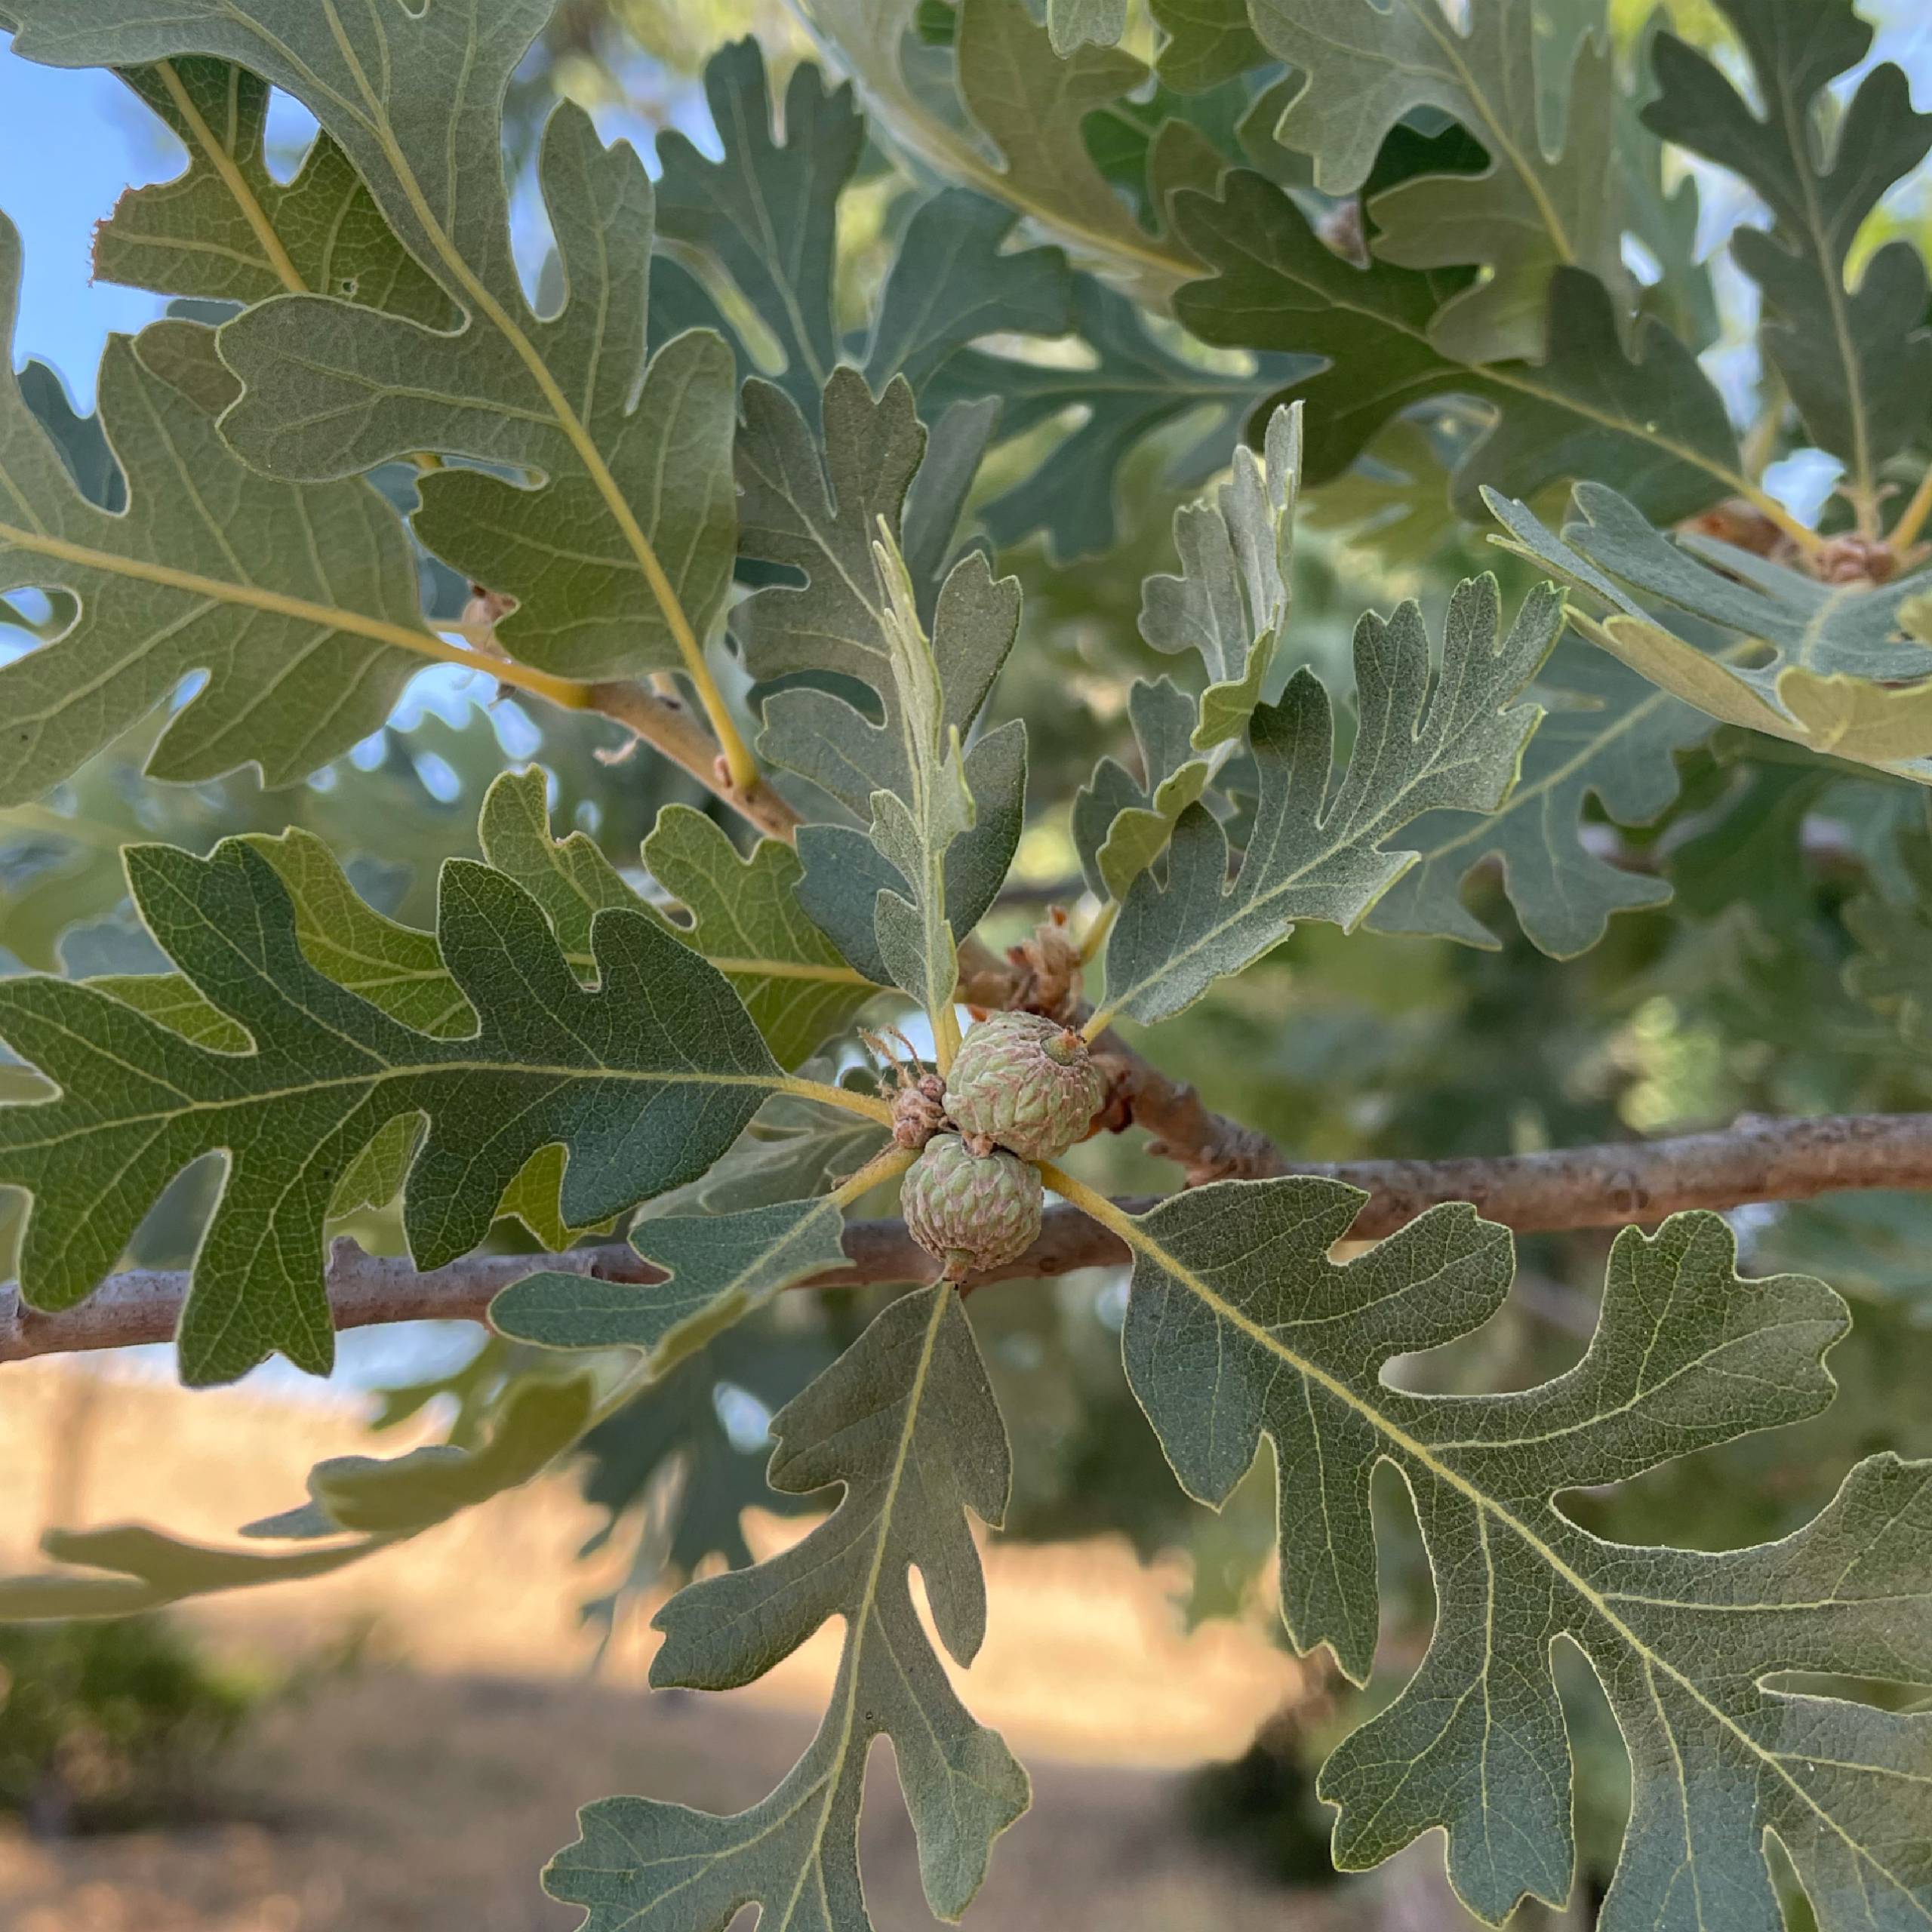 A close up of oak acorns still on the tree.